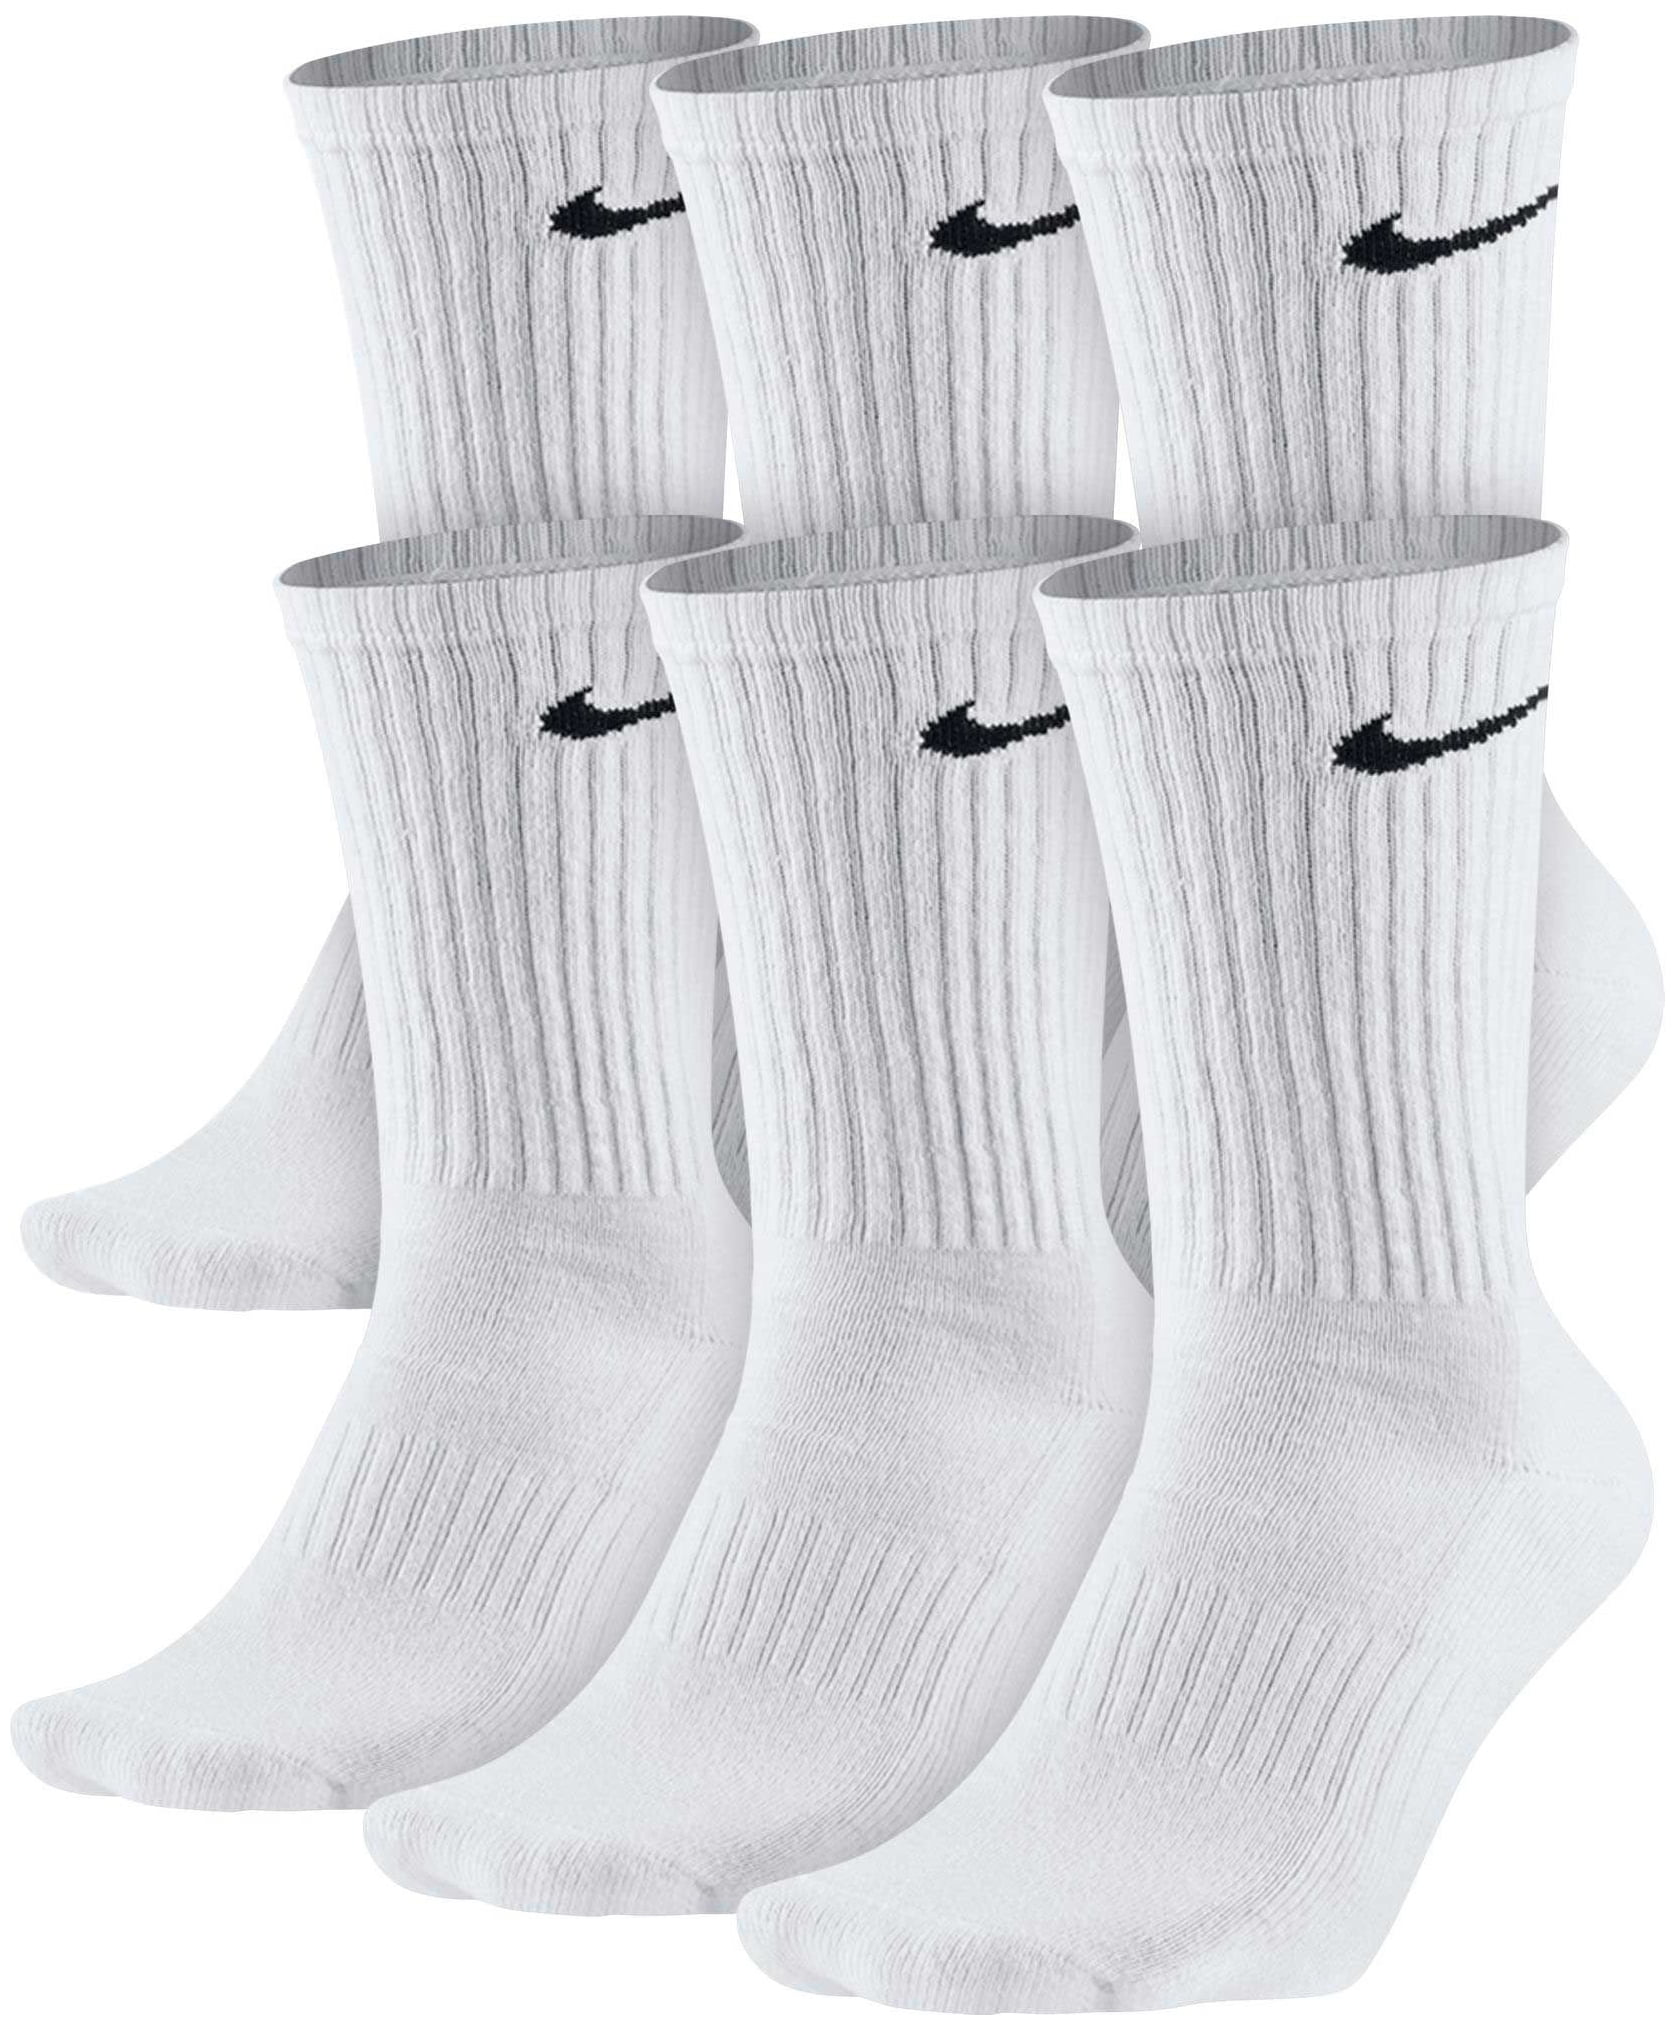 nike elite socks 6 pack